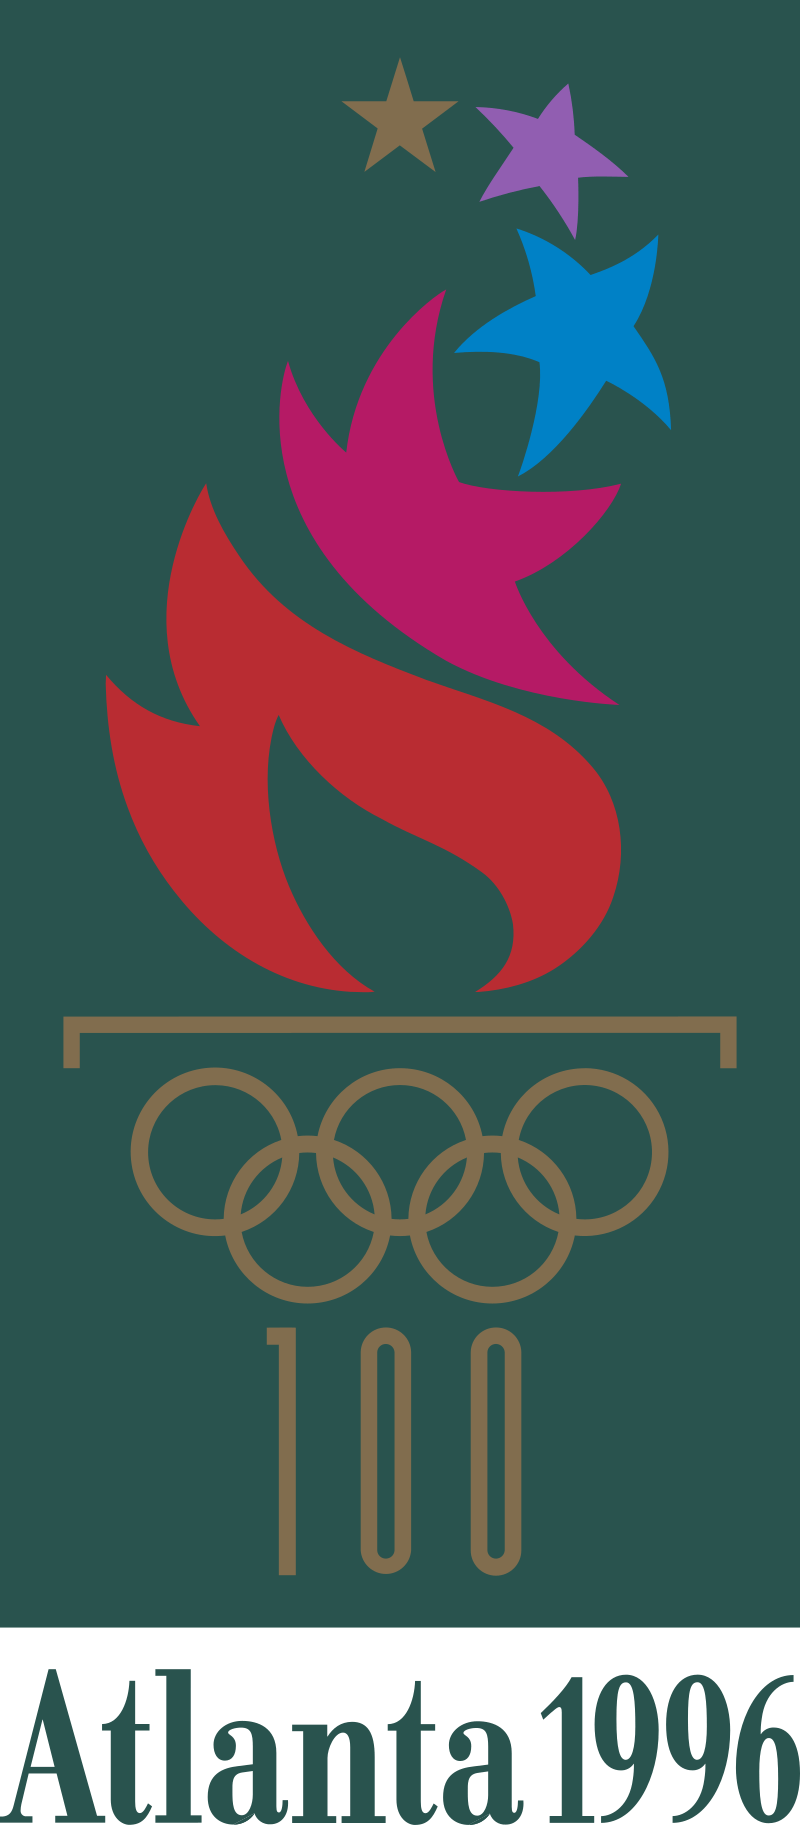 image.png 역대 하계올림픽 엠블럼